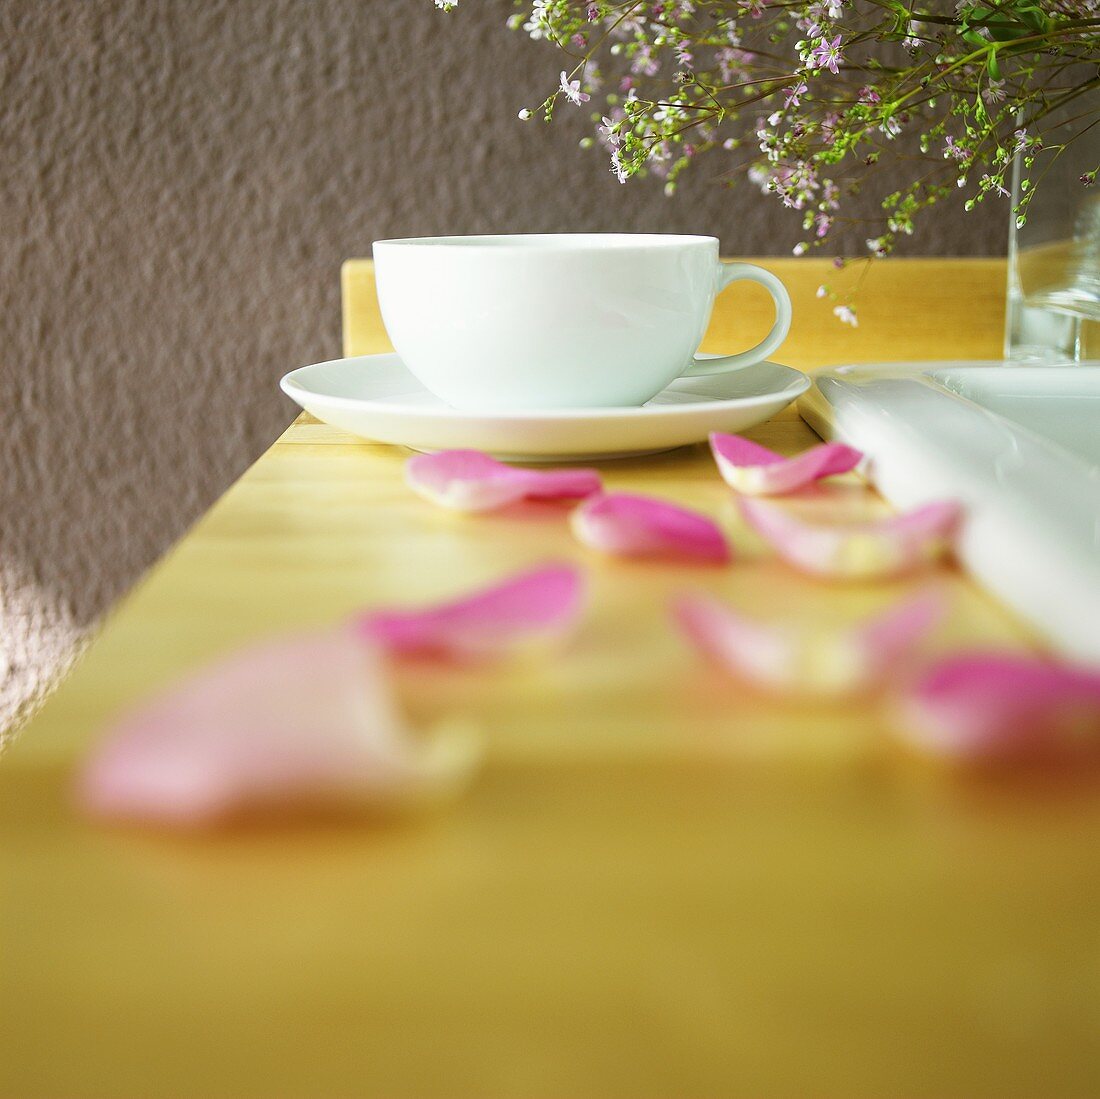 Teacup with rose petals